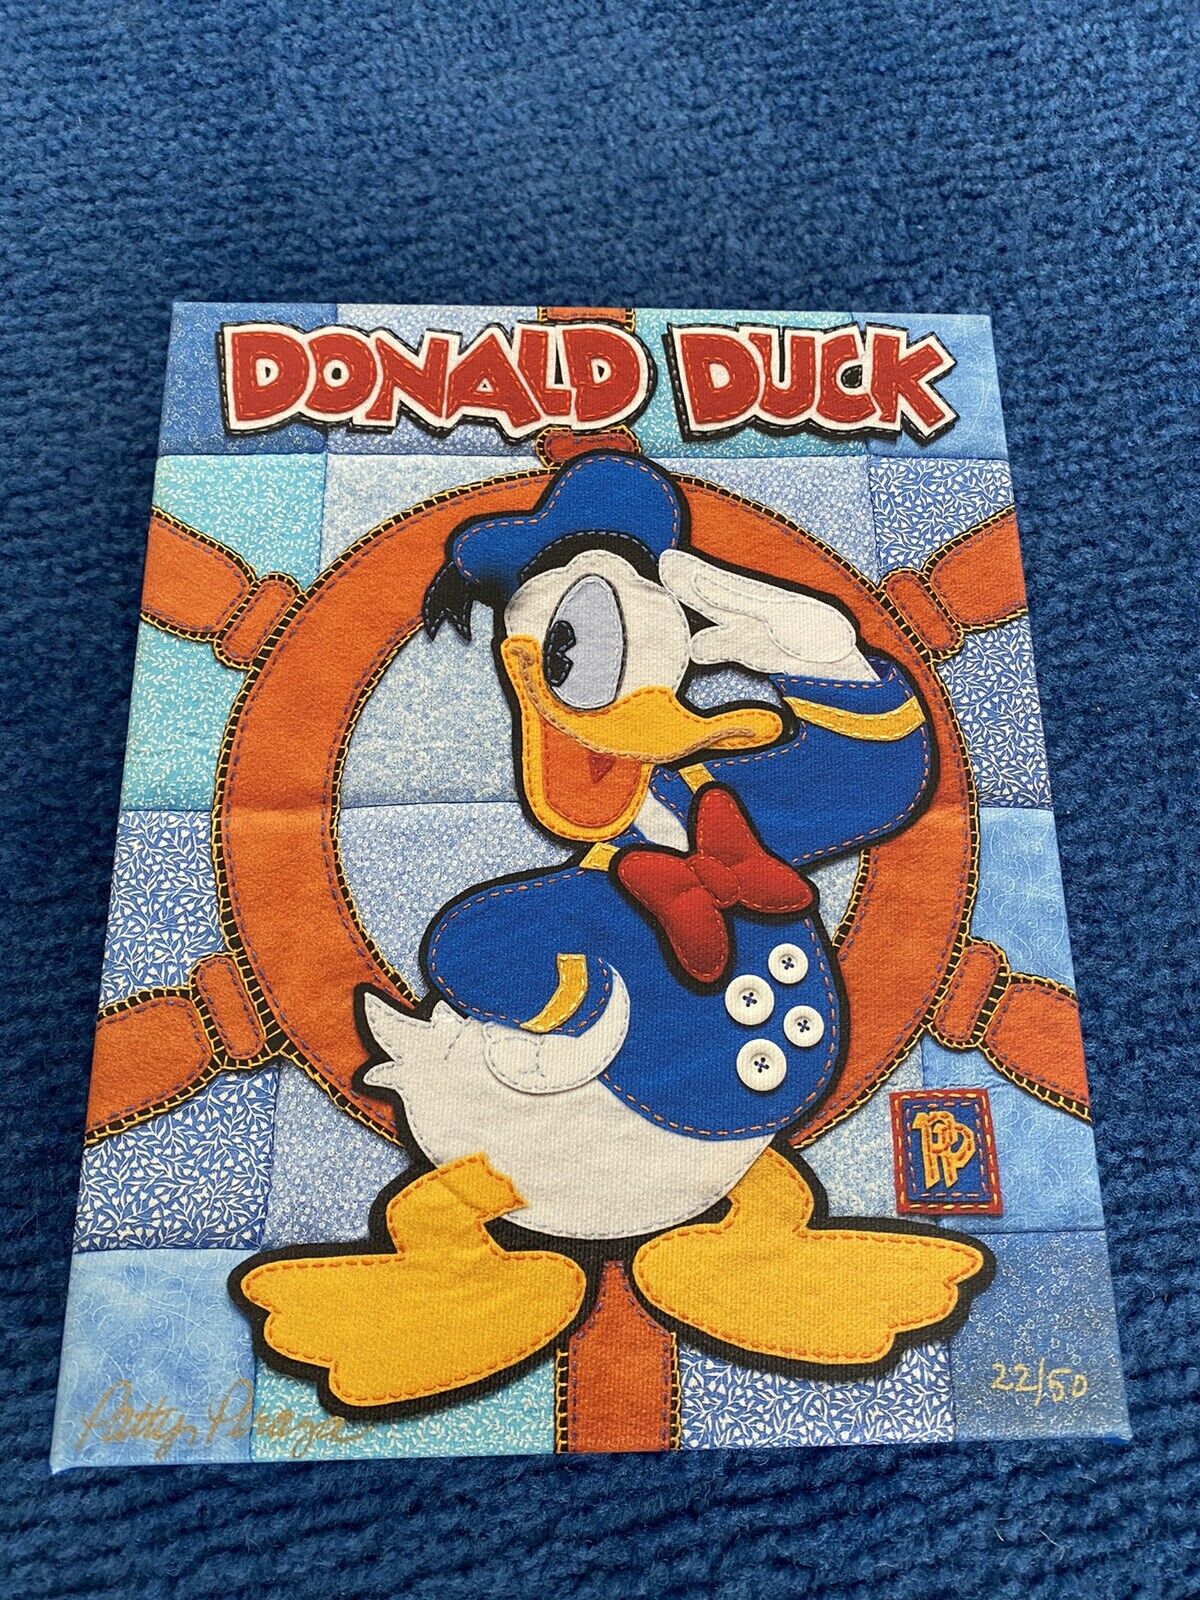 Disney LE 22/50 Donald Duck Gallery Wrap Patty Peraza Signed D23 Expo Coa